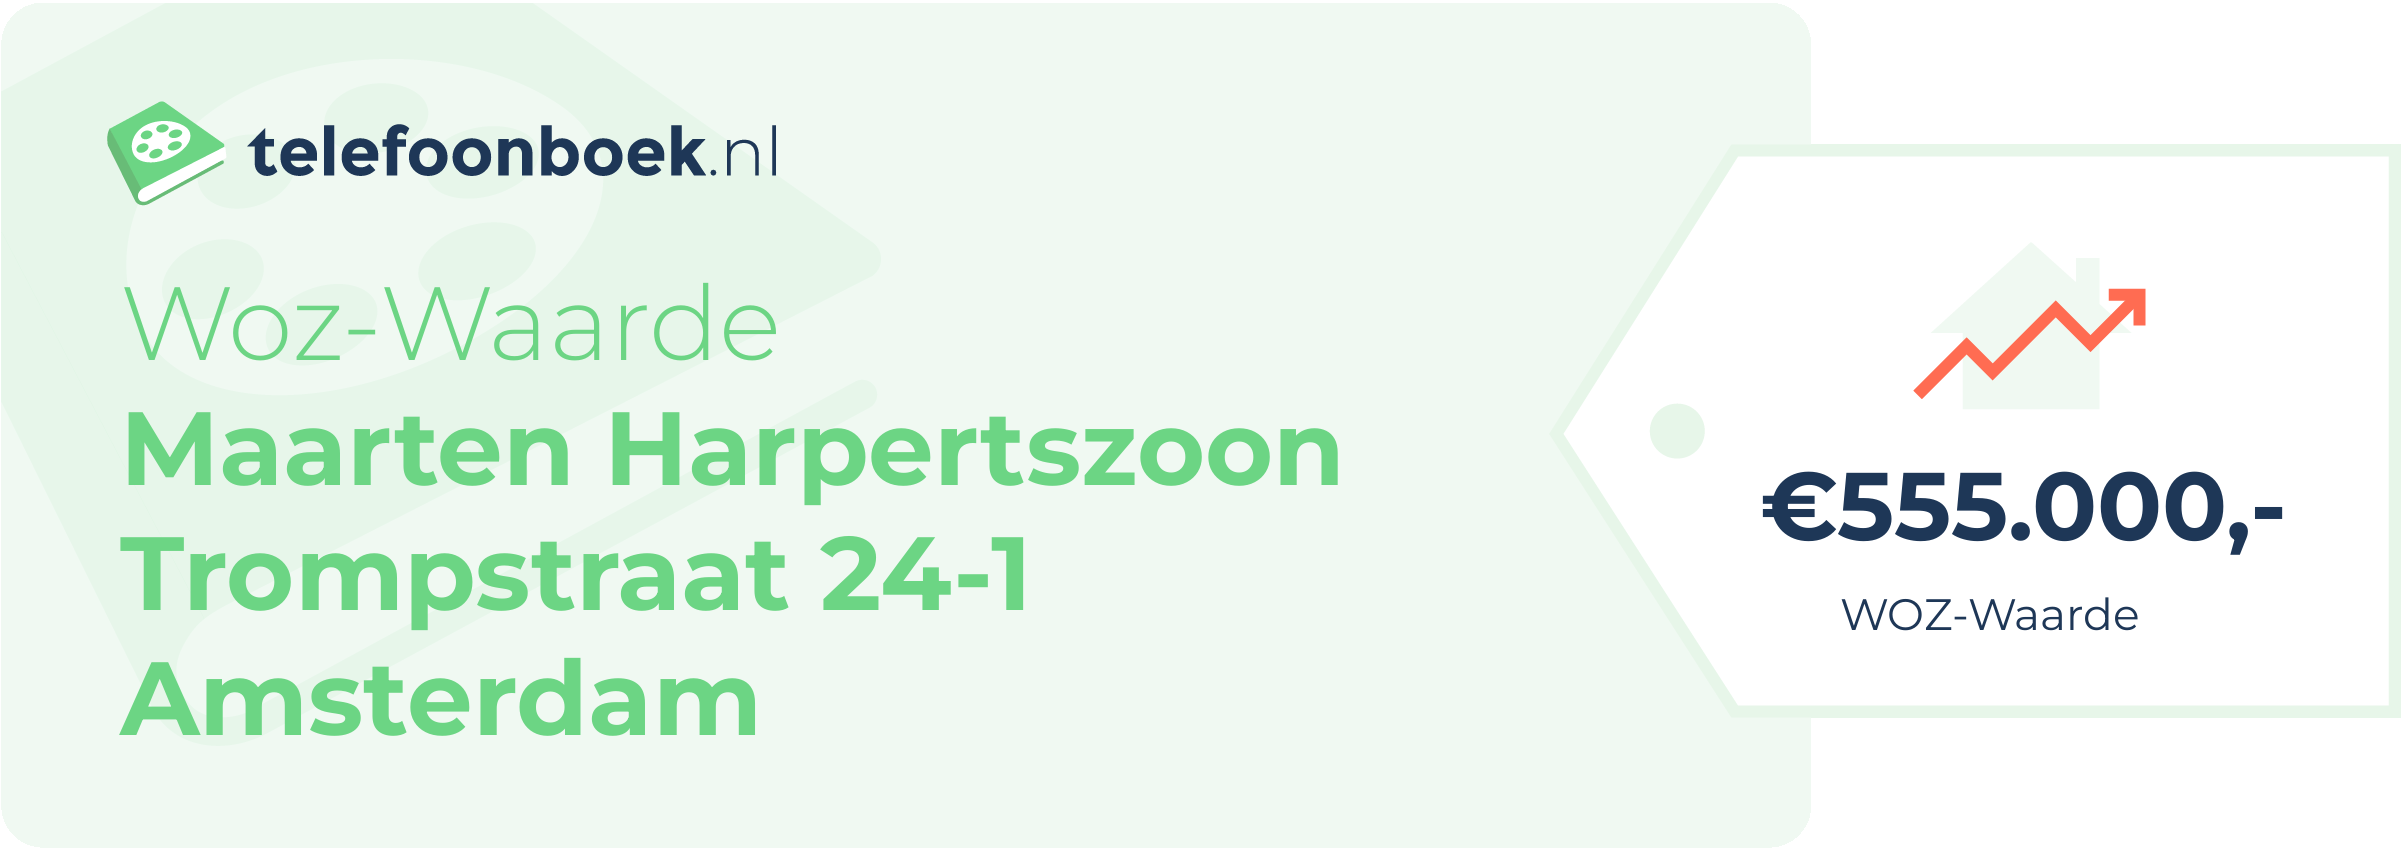 WOZ-waarde Maarten Harpertszoon Trompstraat 24-1 Amsterdam